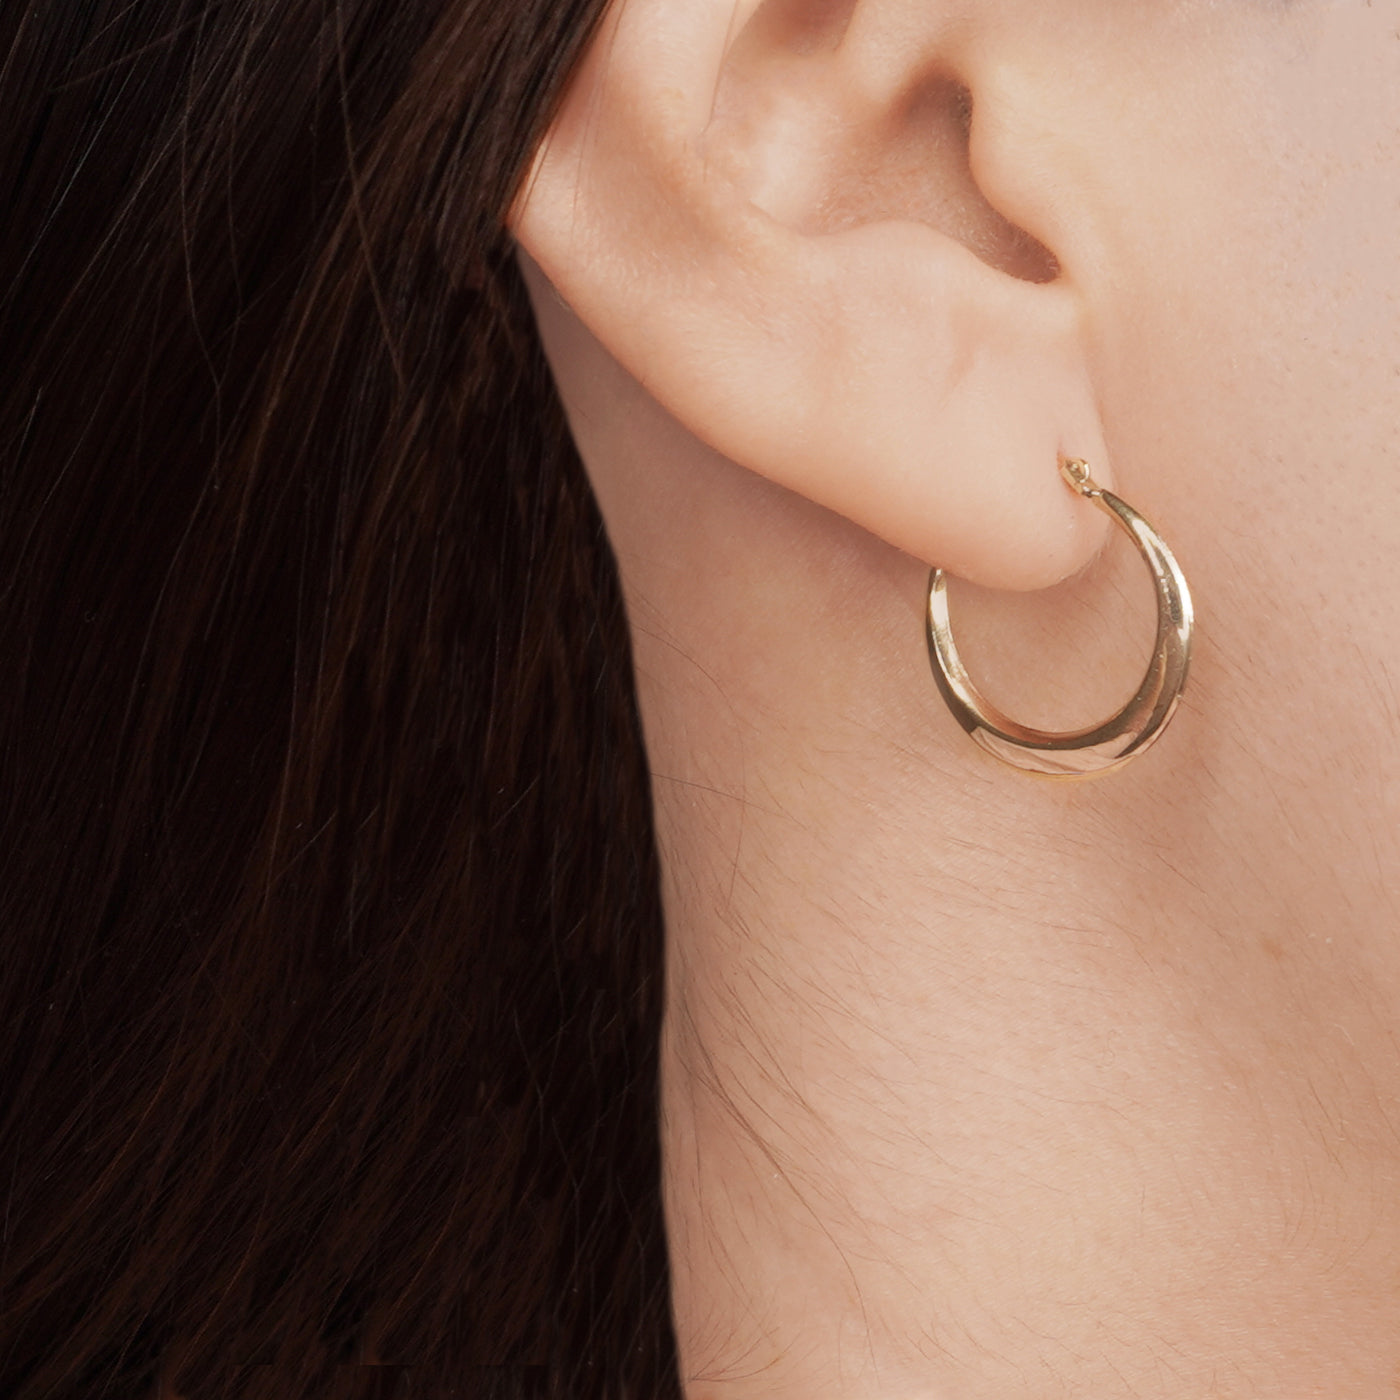 10K Gold High Polish Geometric Round Hoop Earrings